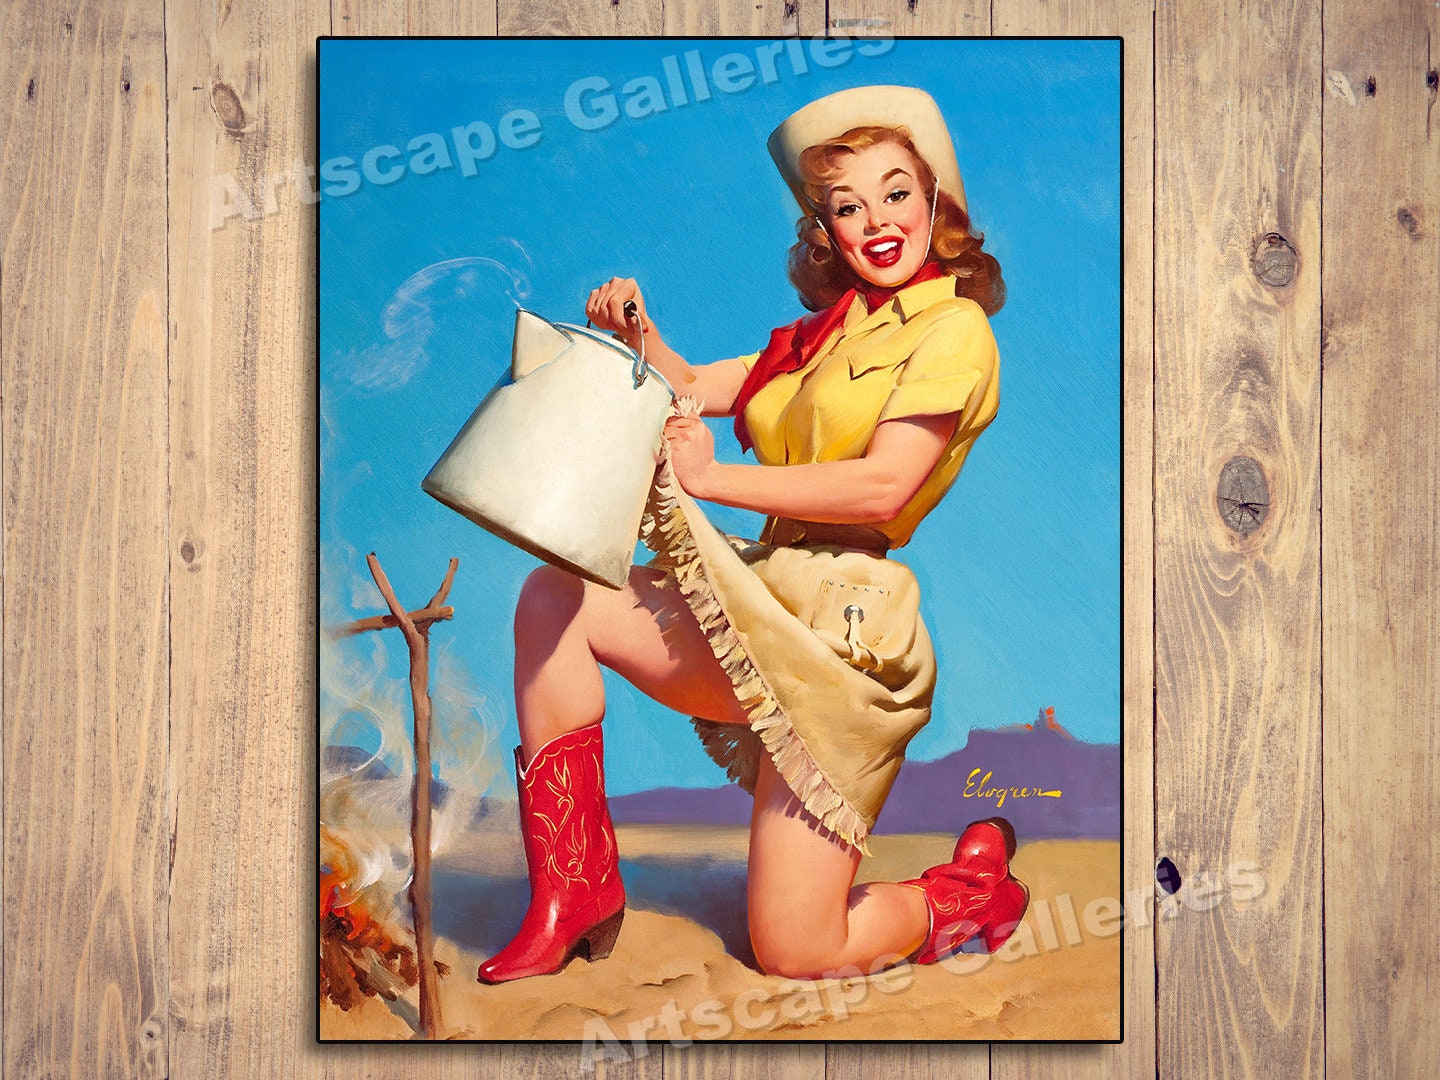 1950s Elvgren Pin-up Girl Poster tops in